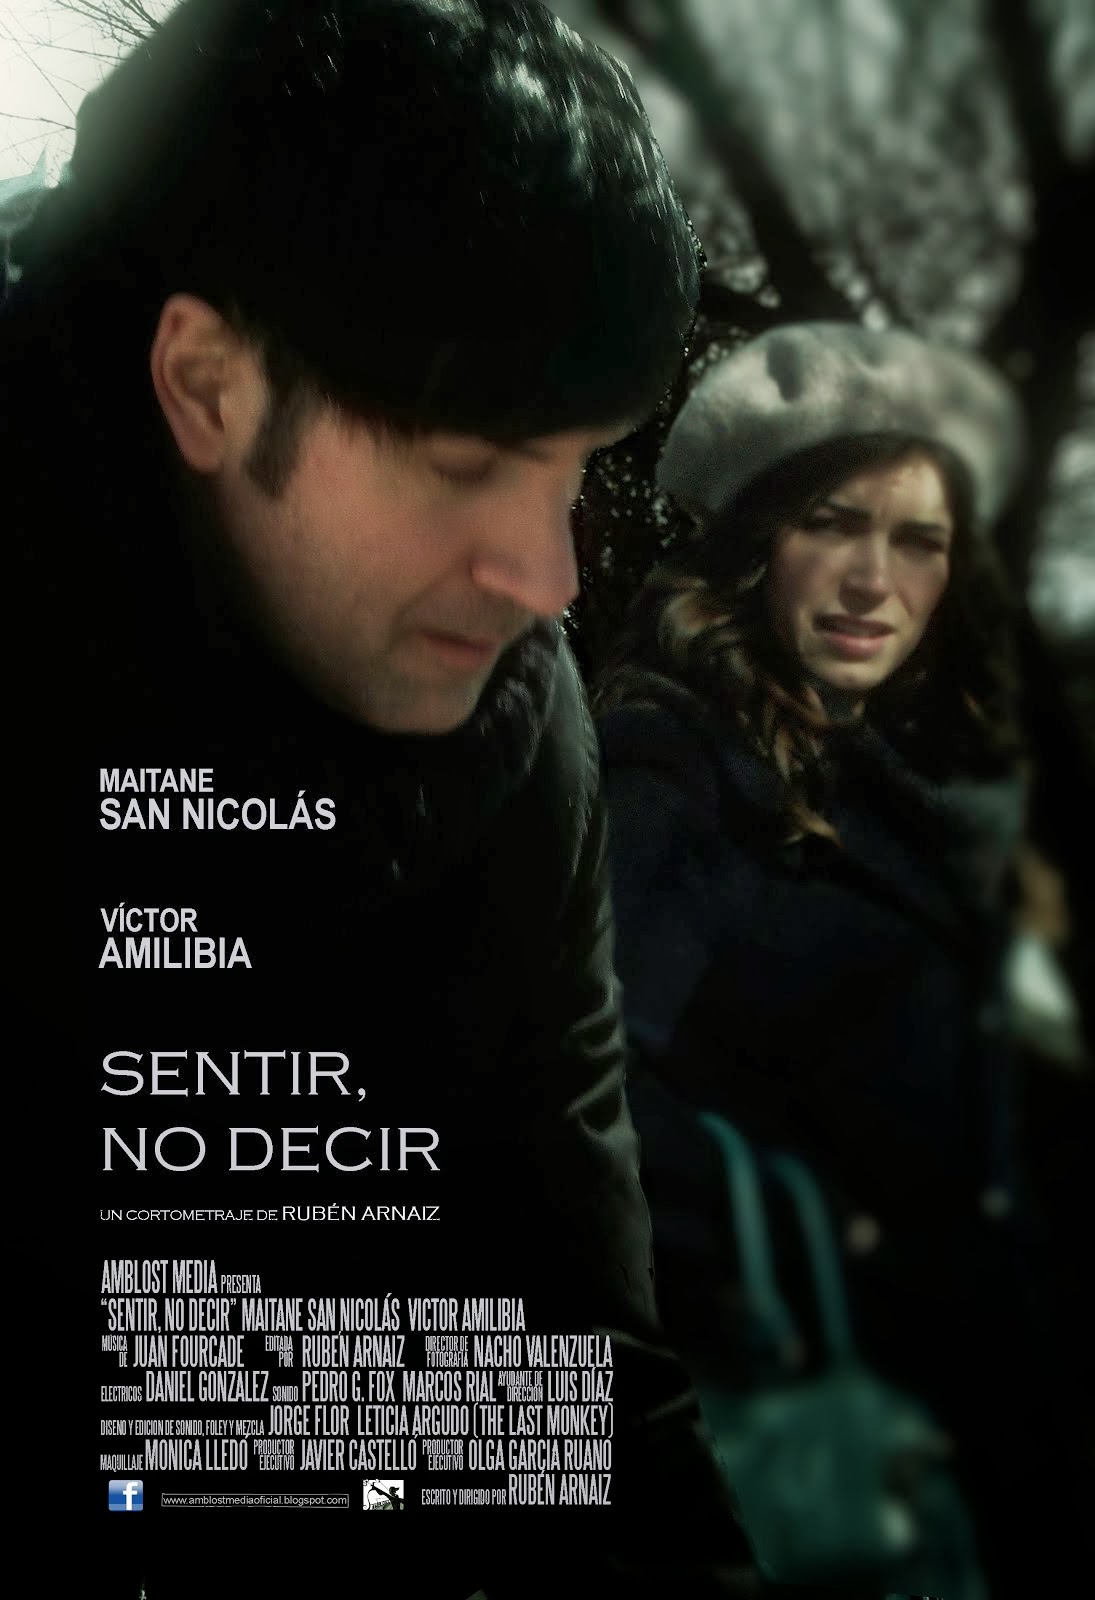 "SENTIR, NO DECIR" (2013)